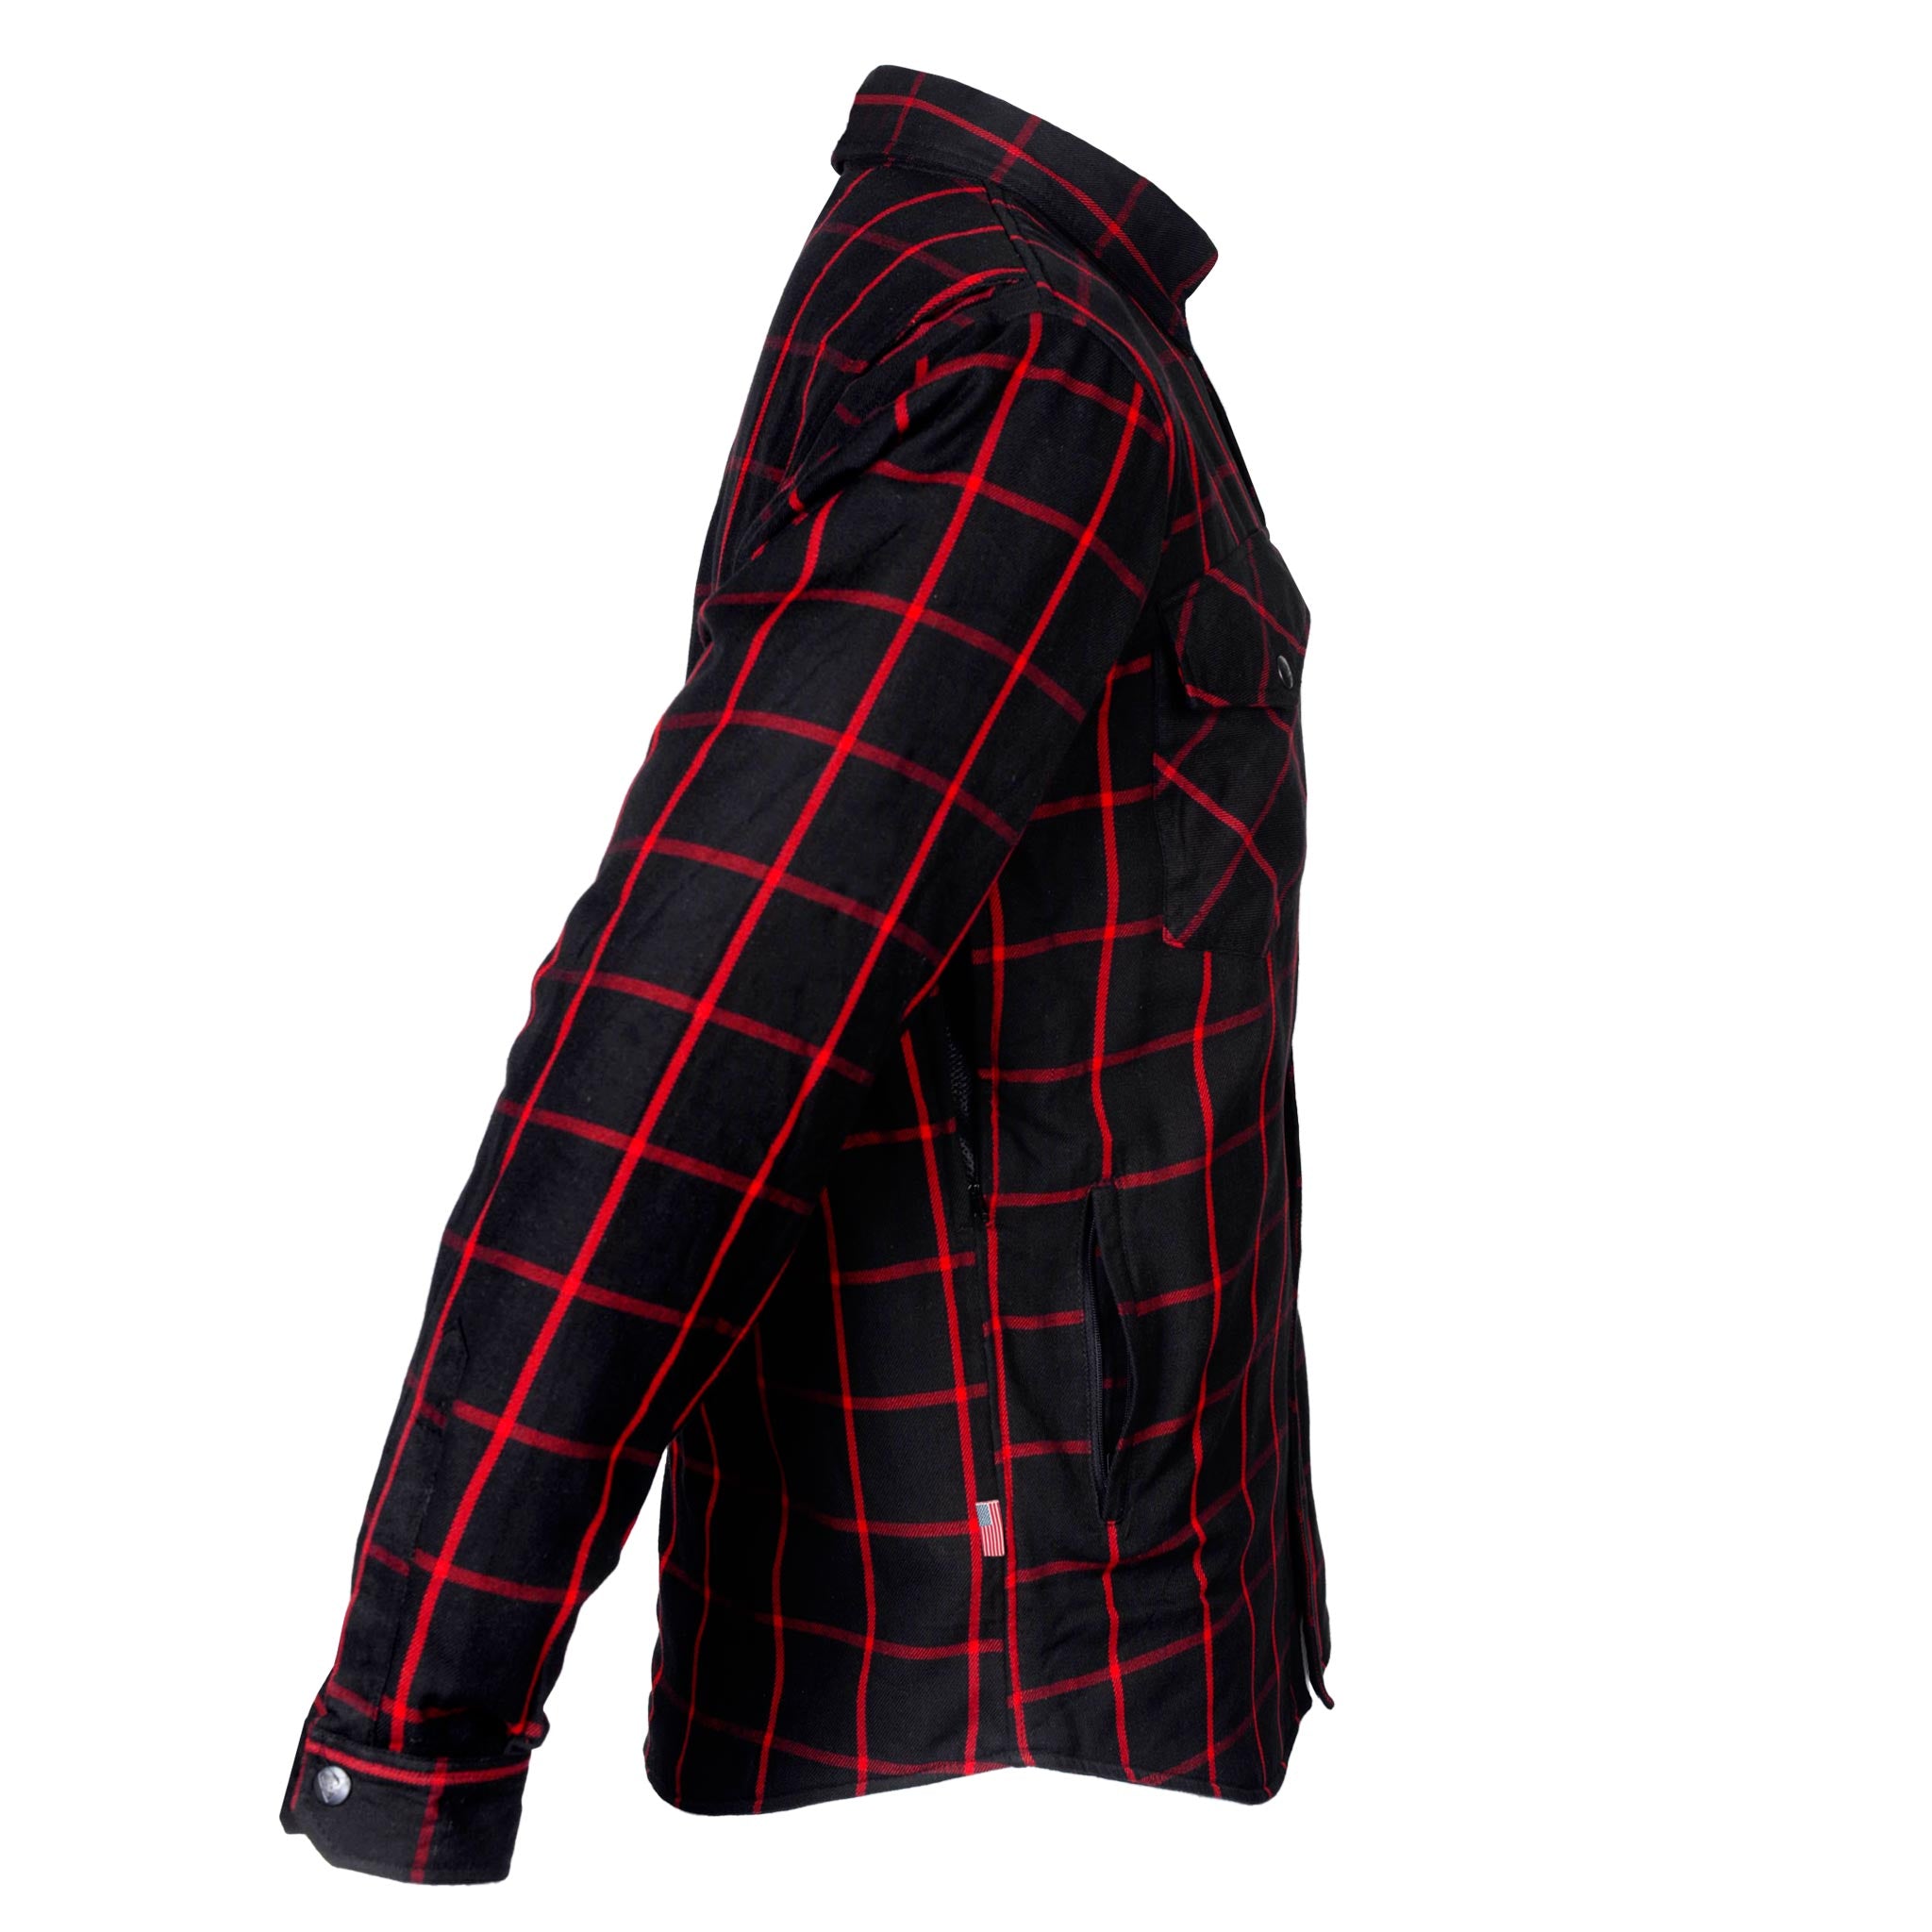 Protective Flannel Shirt "Crimson Lane" - Black & Red Stripes